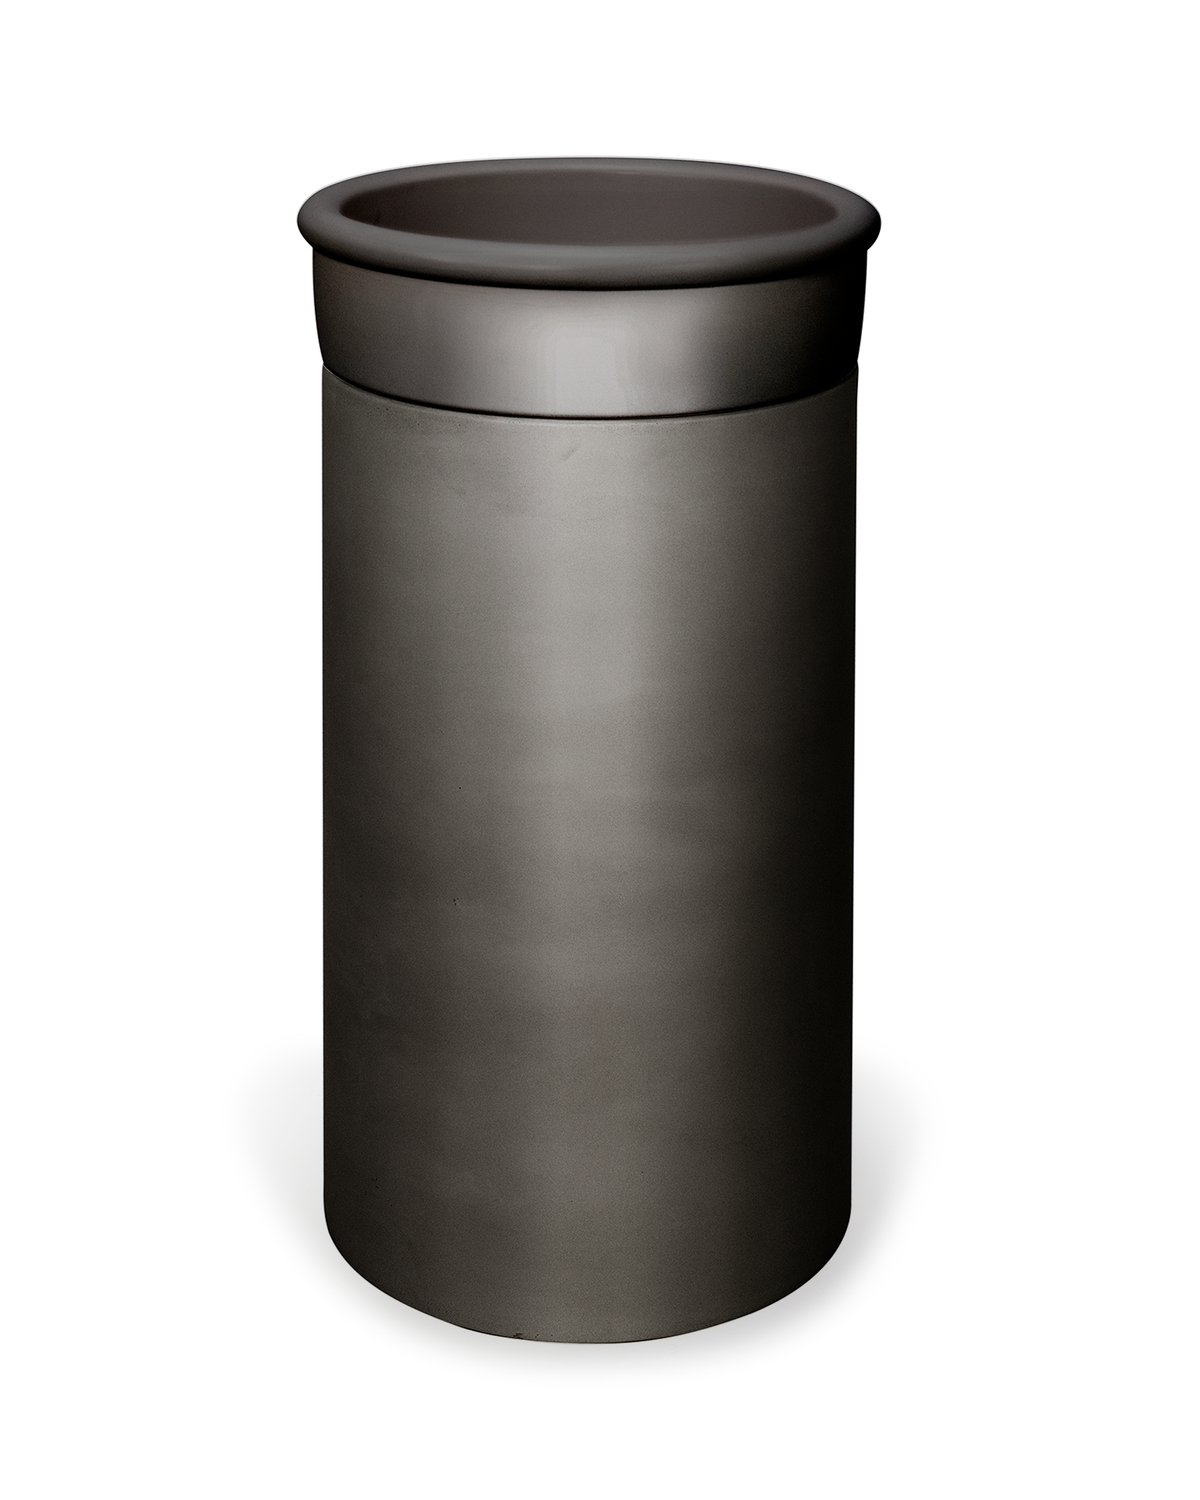 Cylinder - Tubb Basin (Charcoal)